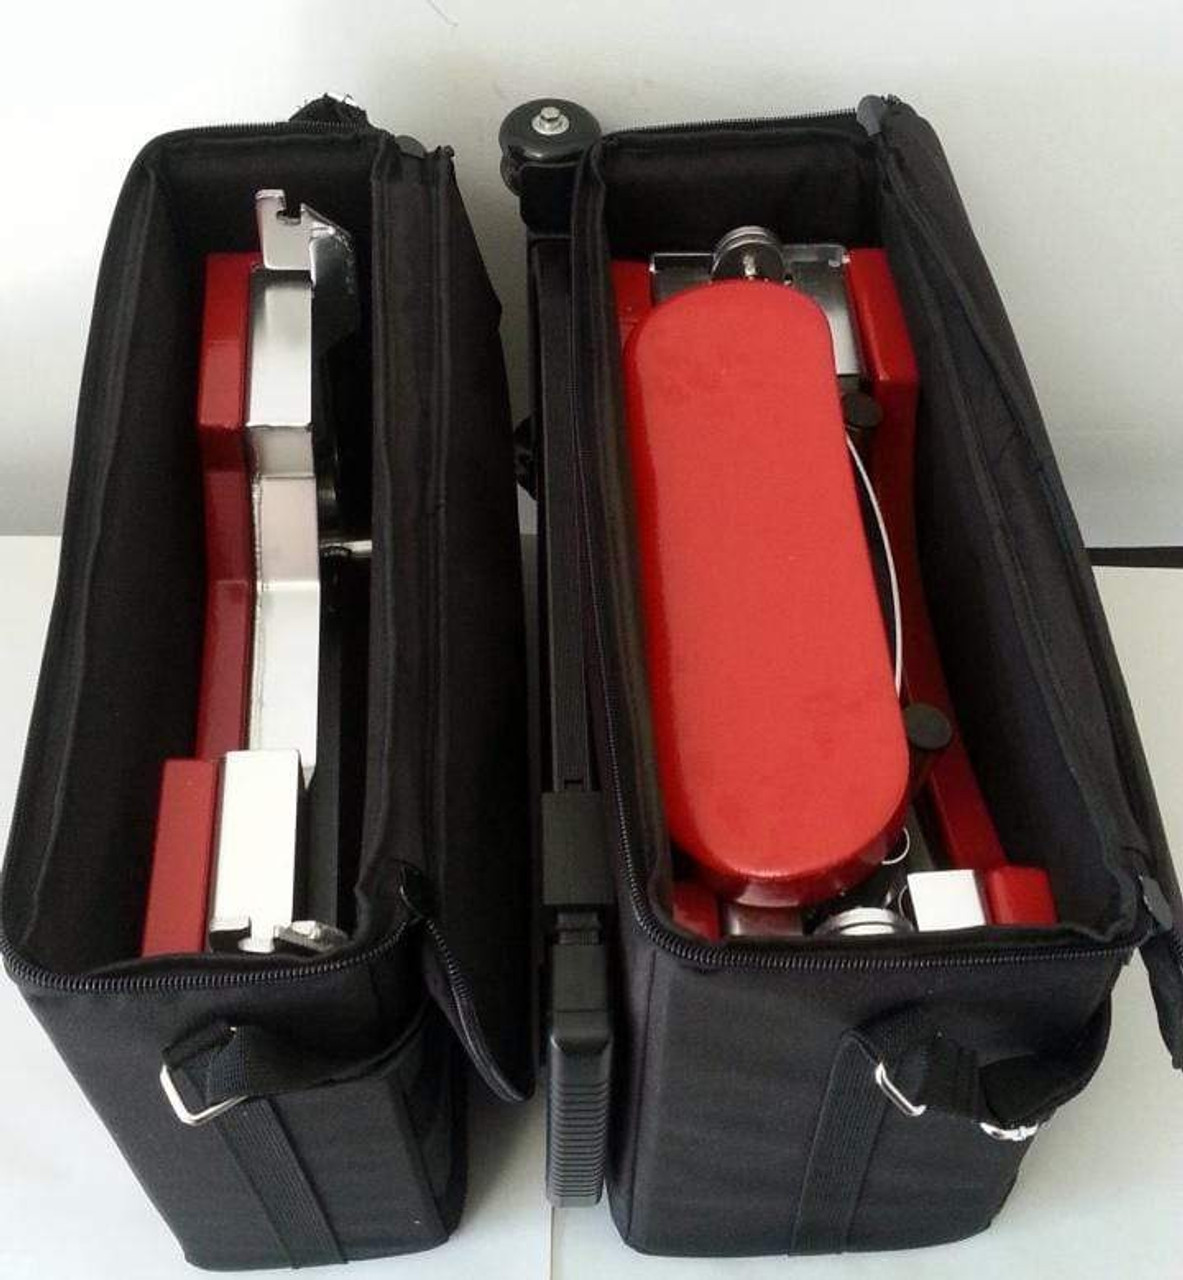 Go_Anywhere_Sport Tub Bench_Travel Bag